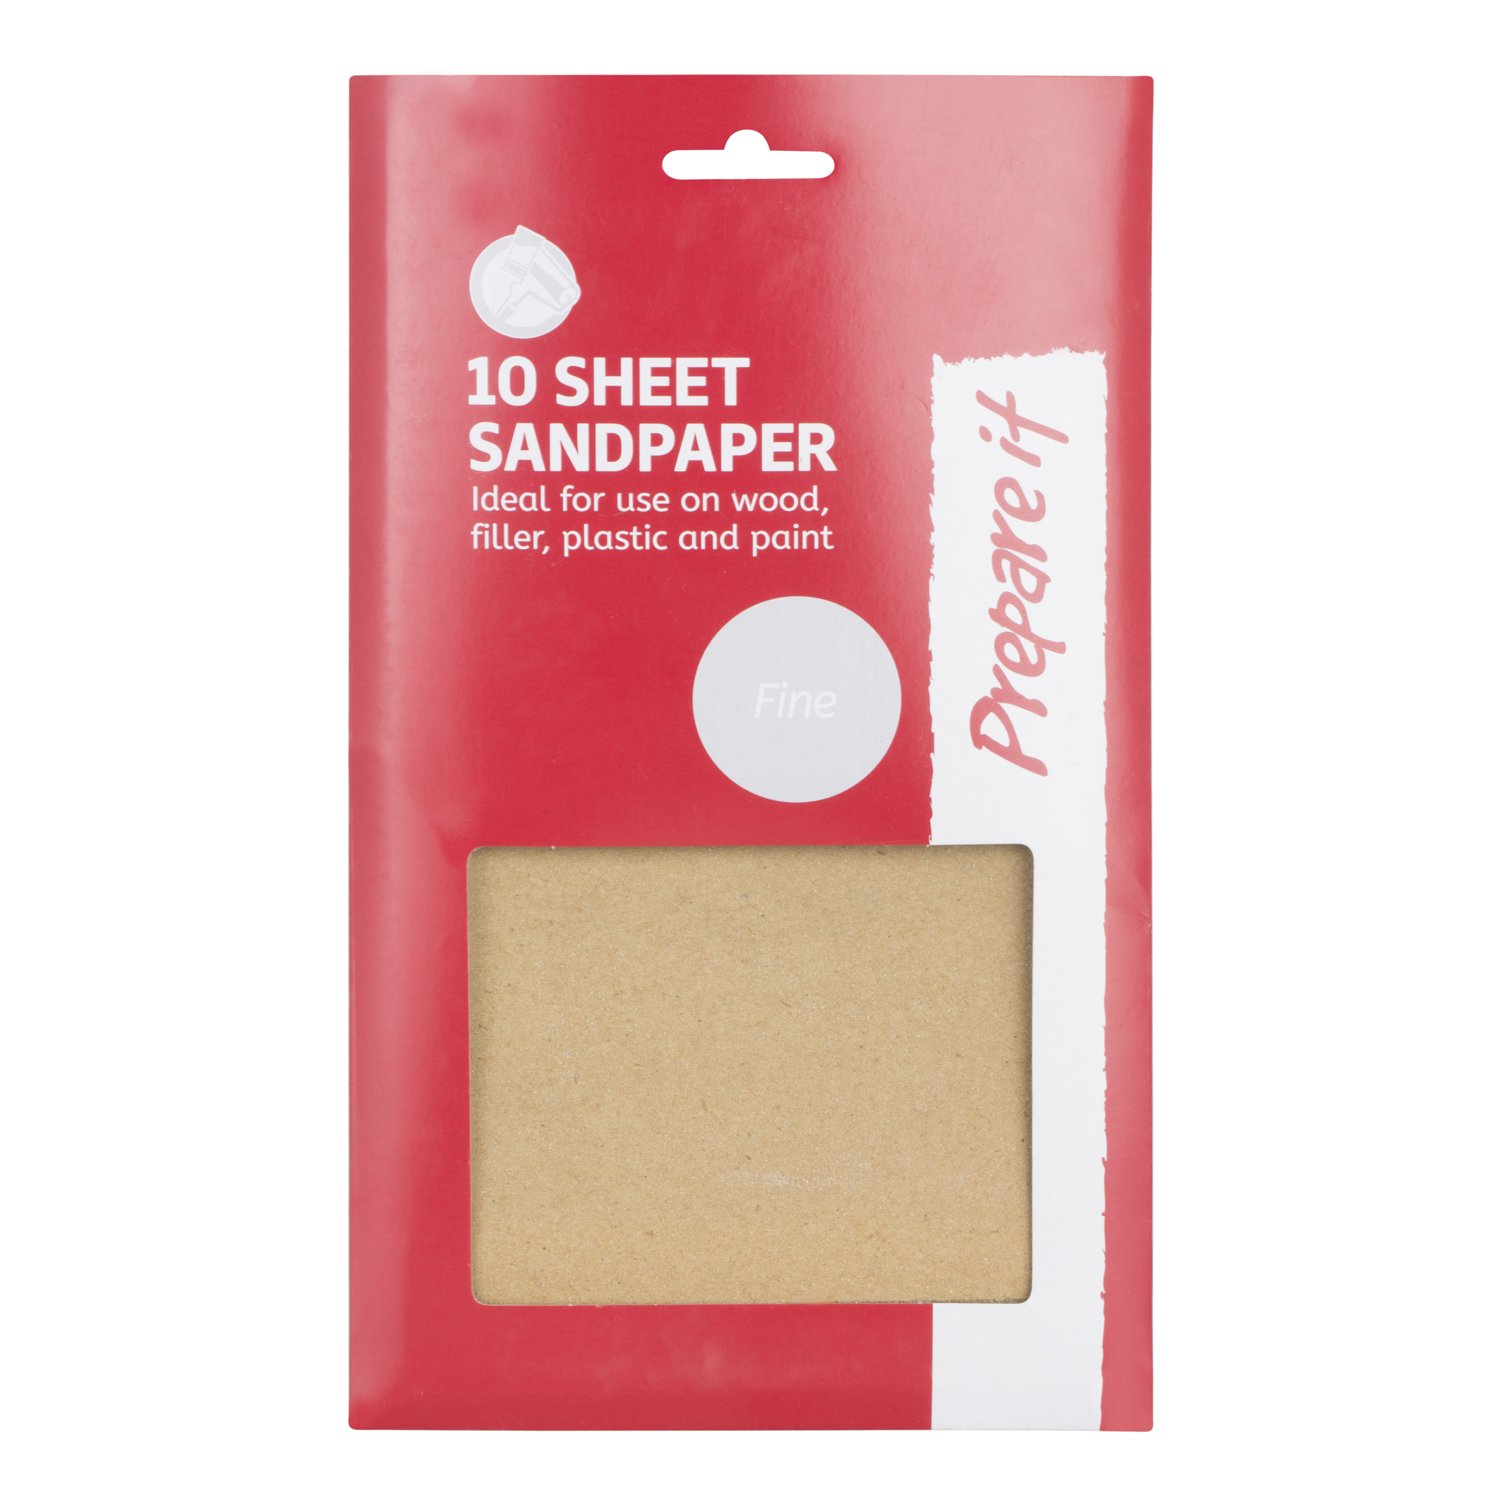 Prepare it Fine Grit Sandpaper Sheets 10 Pack Image